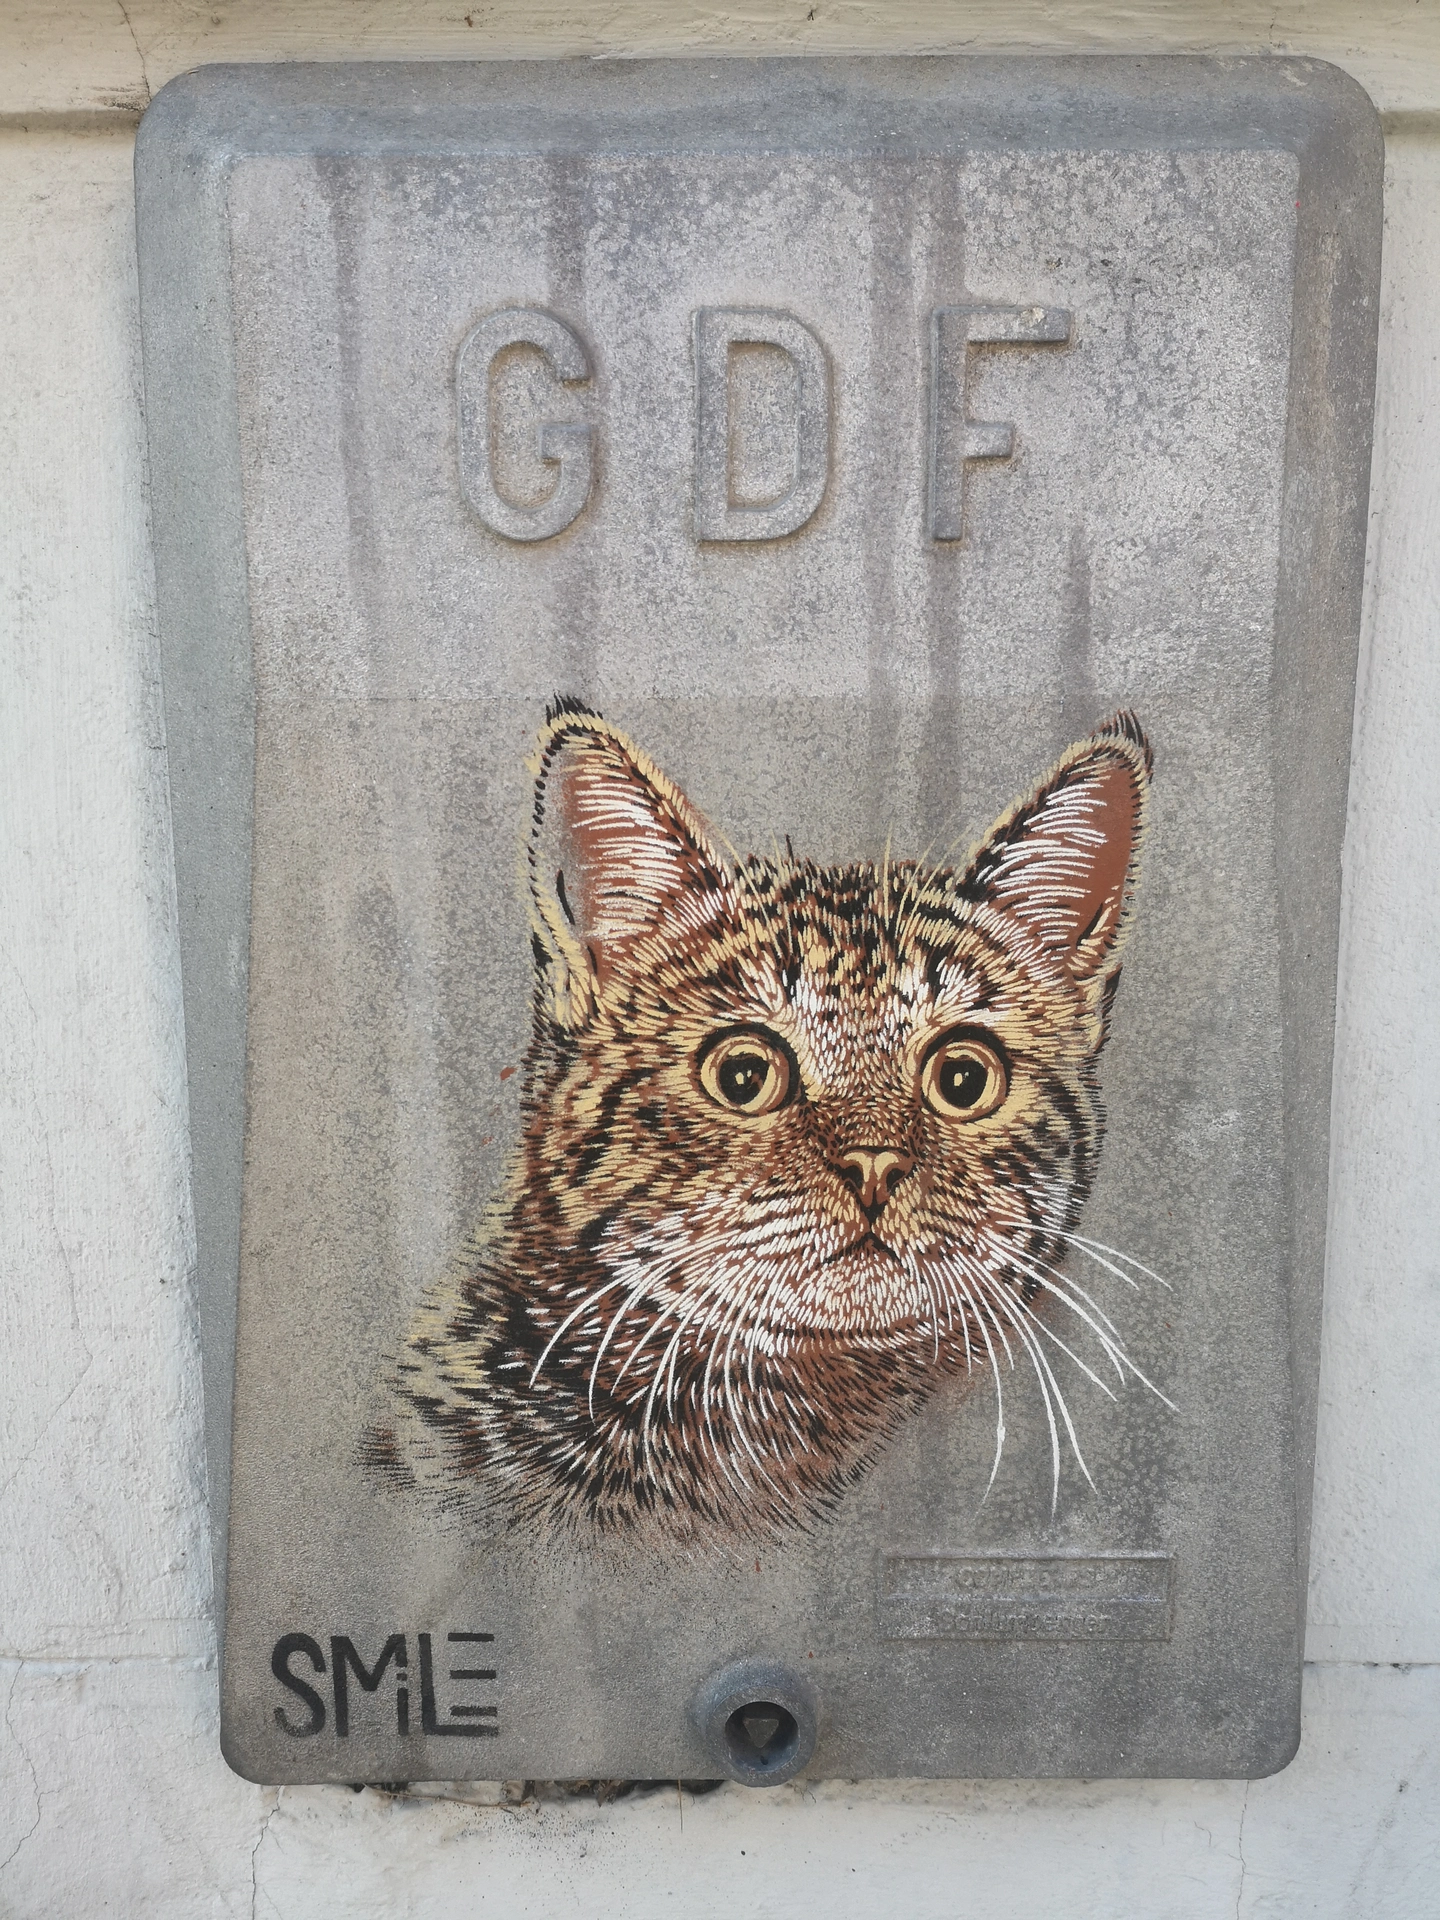 Oeuvre de Street Art à Saint-Denis